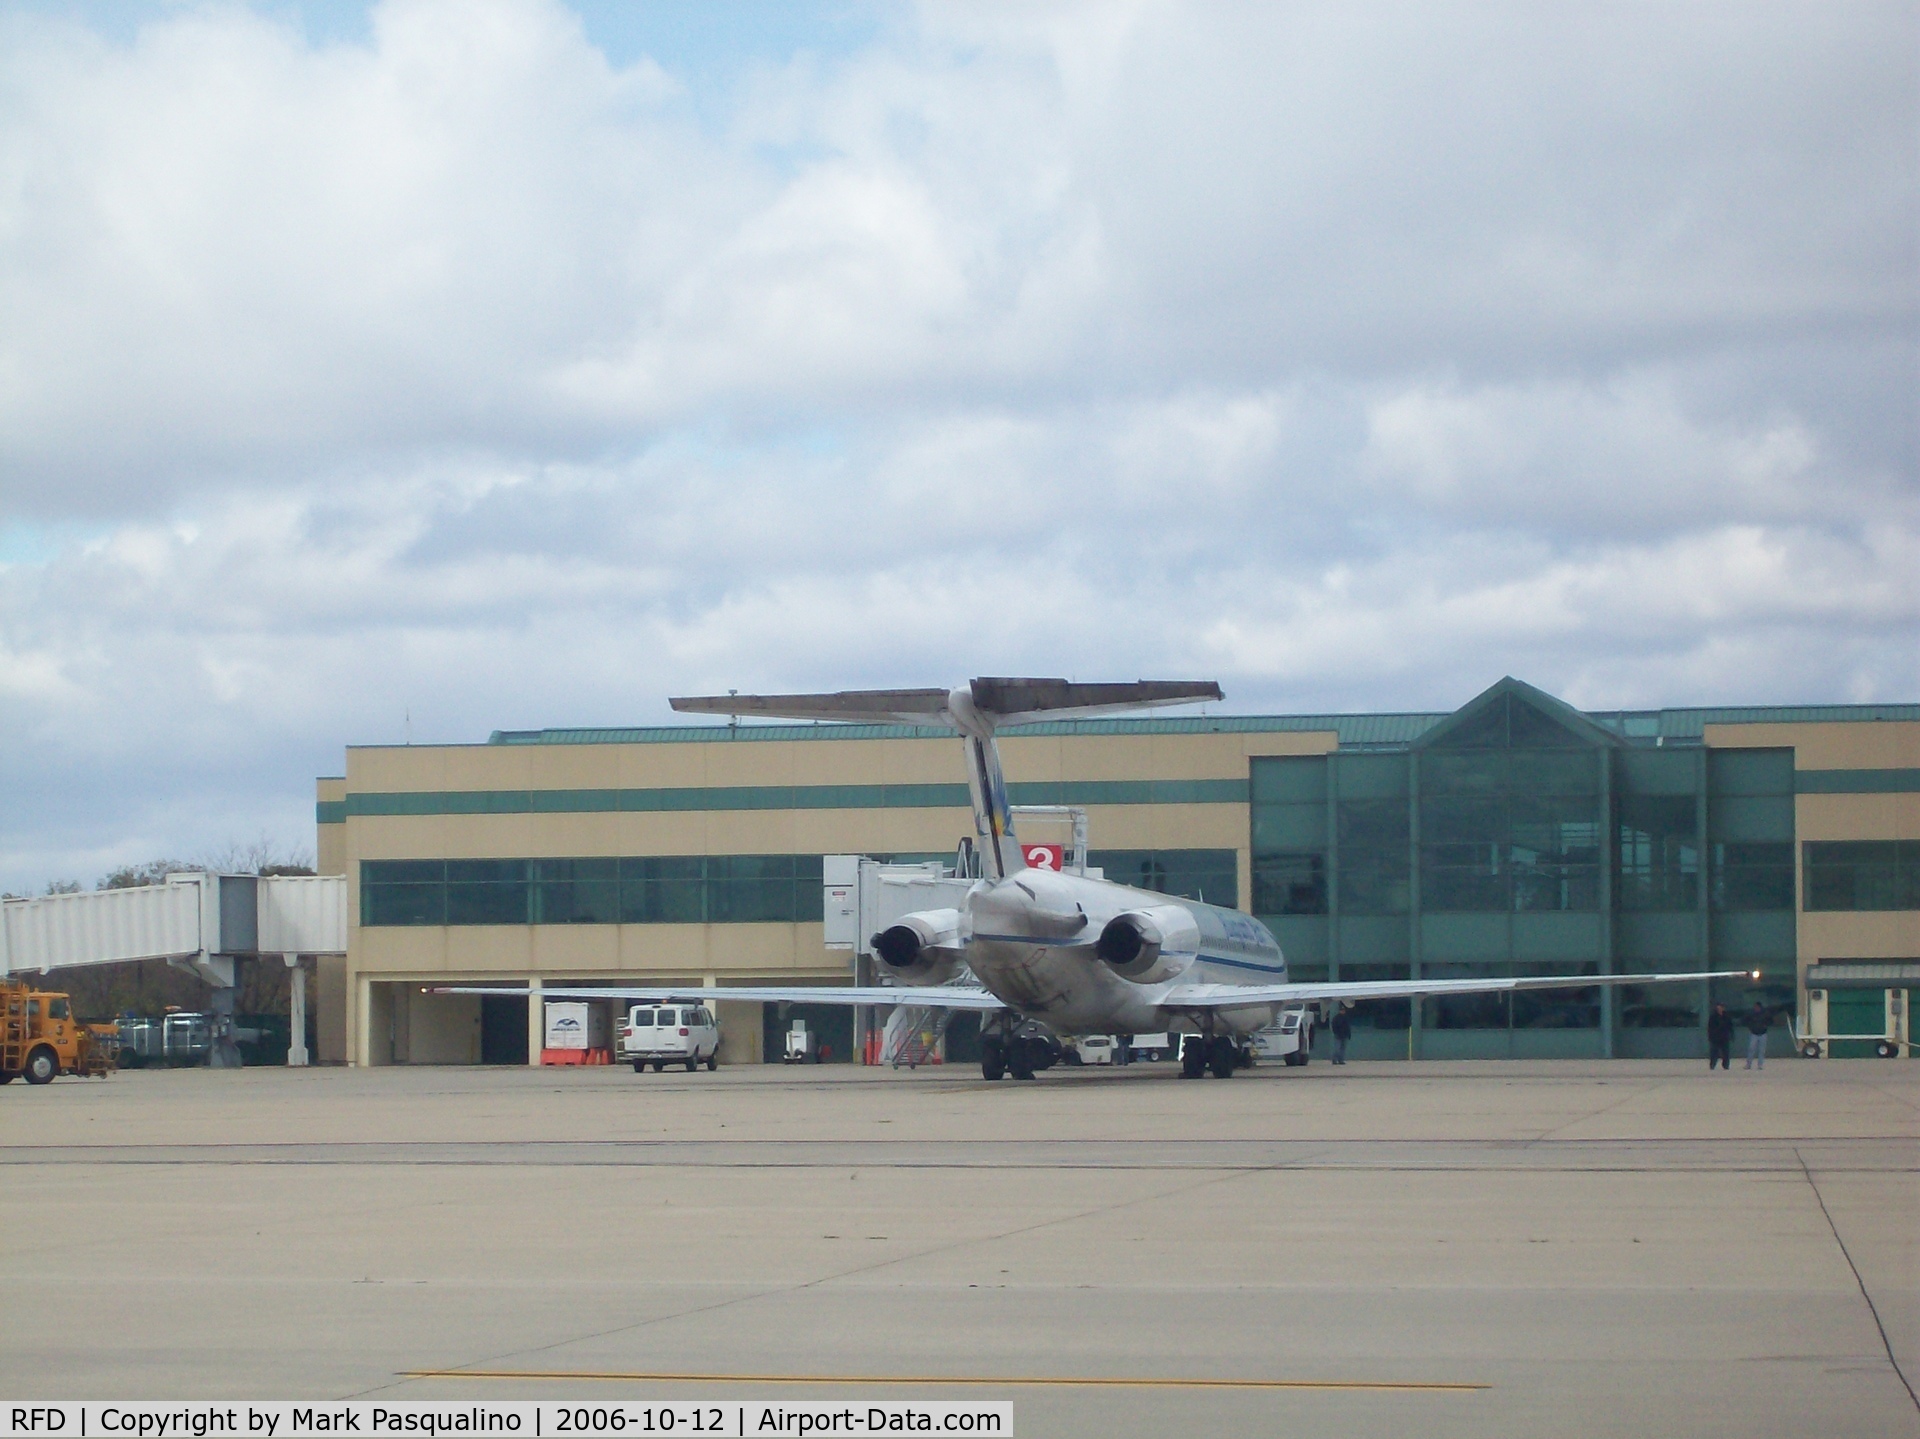 Chicago/rockford International Airport (RFD) - Airline ramp